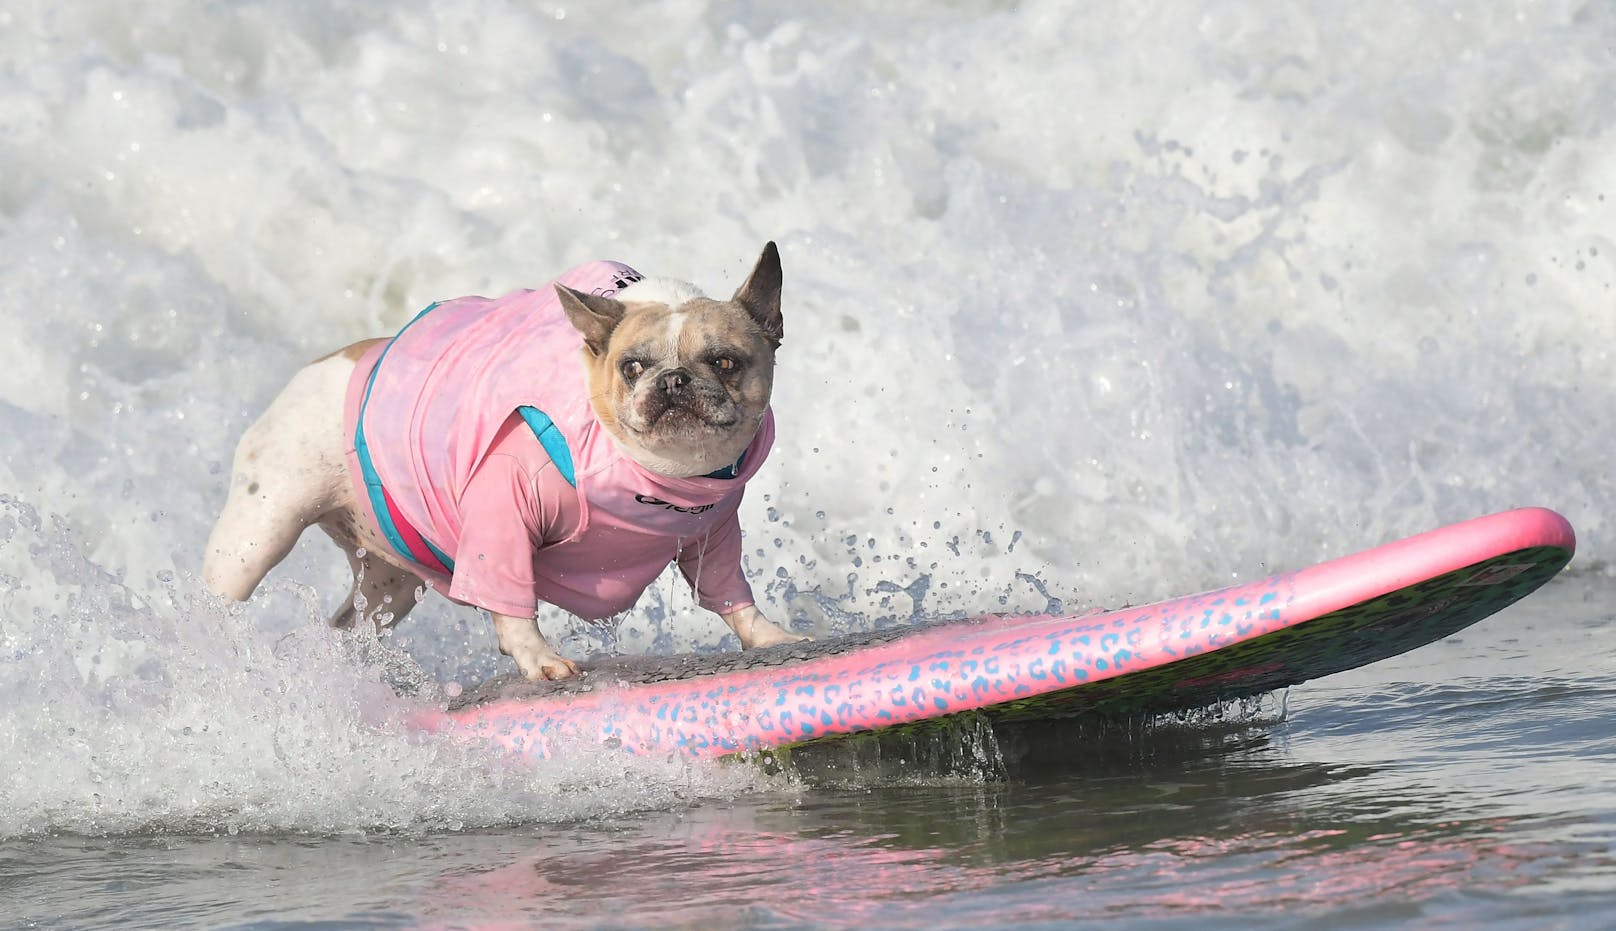 Am 25. September fand der jährliche Hundesurf-Wettbewerb am Huntington Beach statt. 